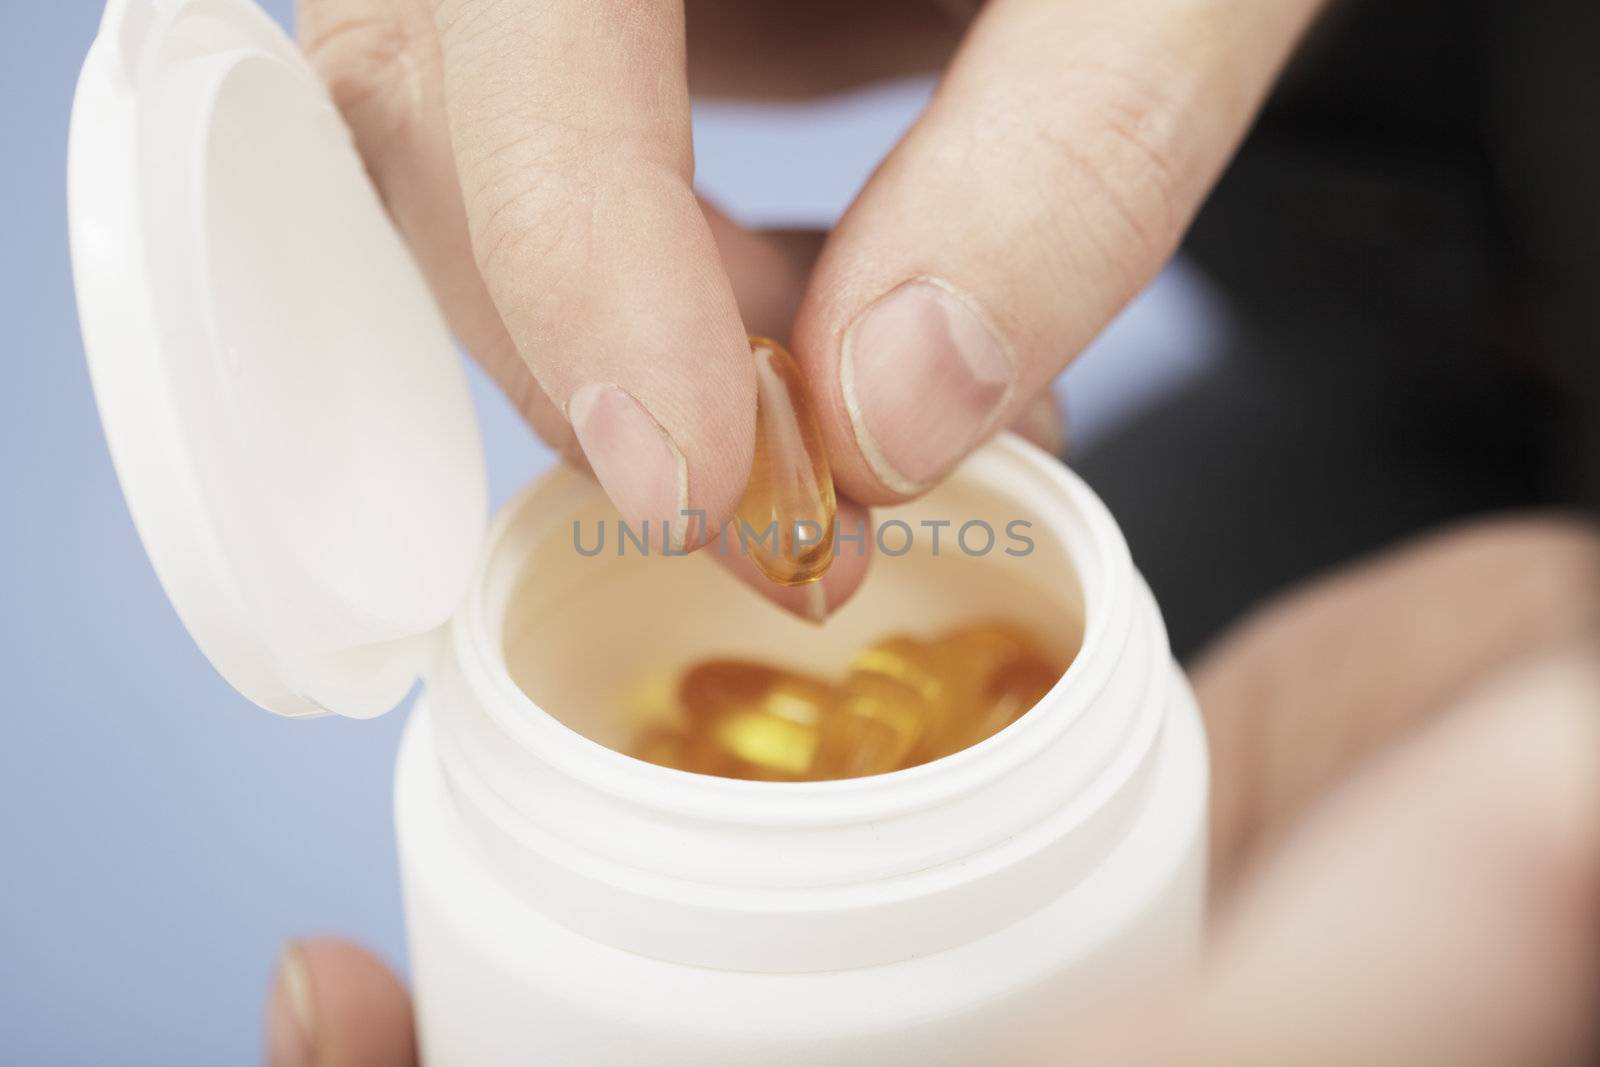 Fingers taking Omega 3 fish oil capsule from a bottle